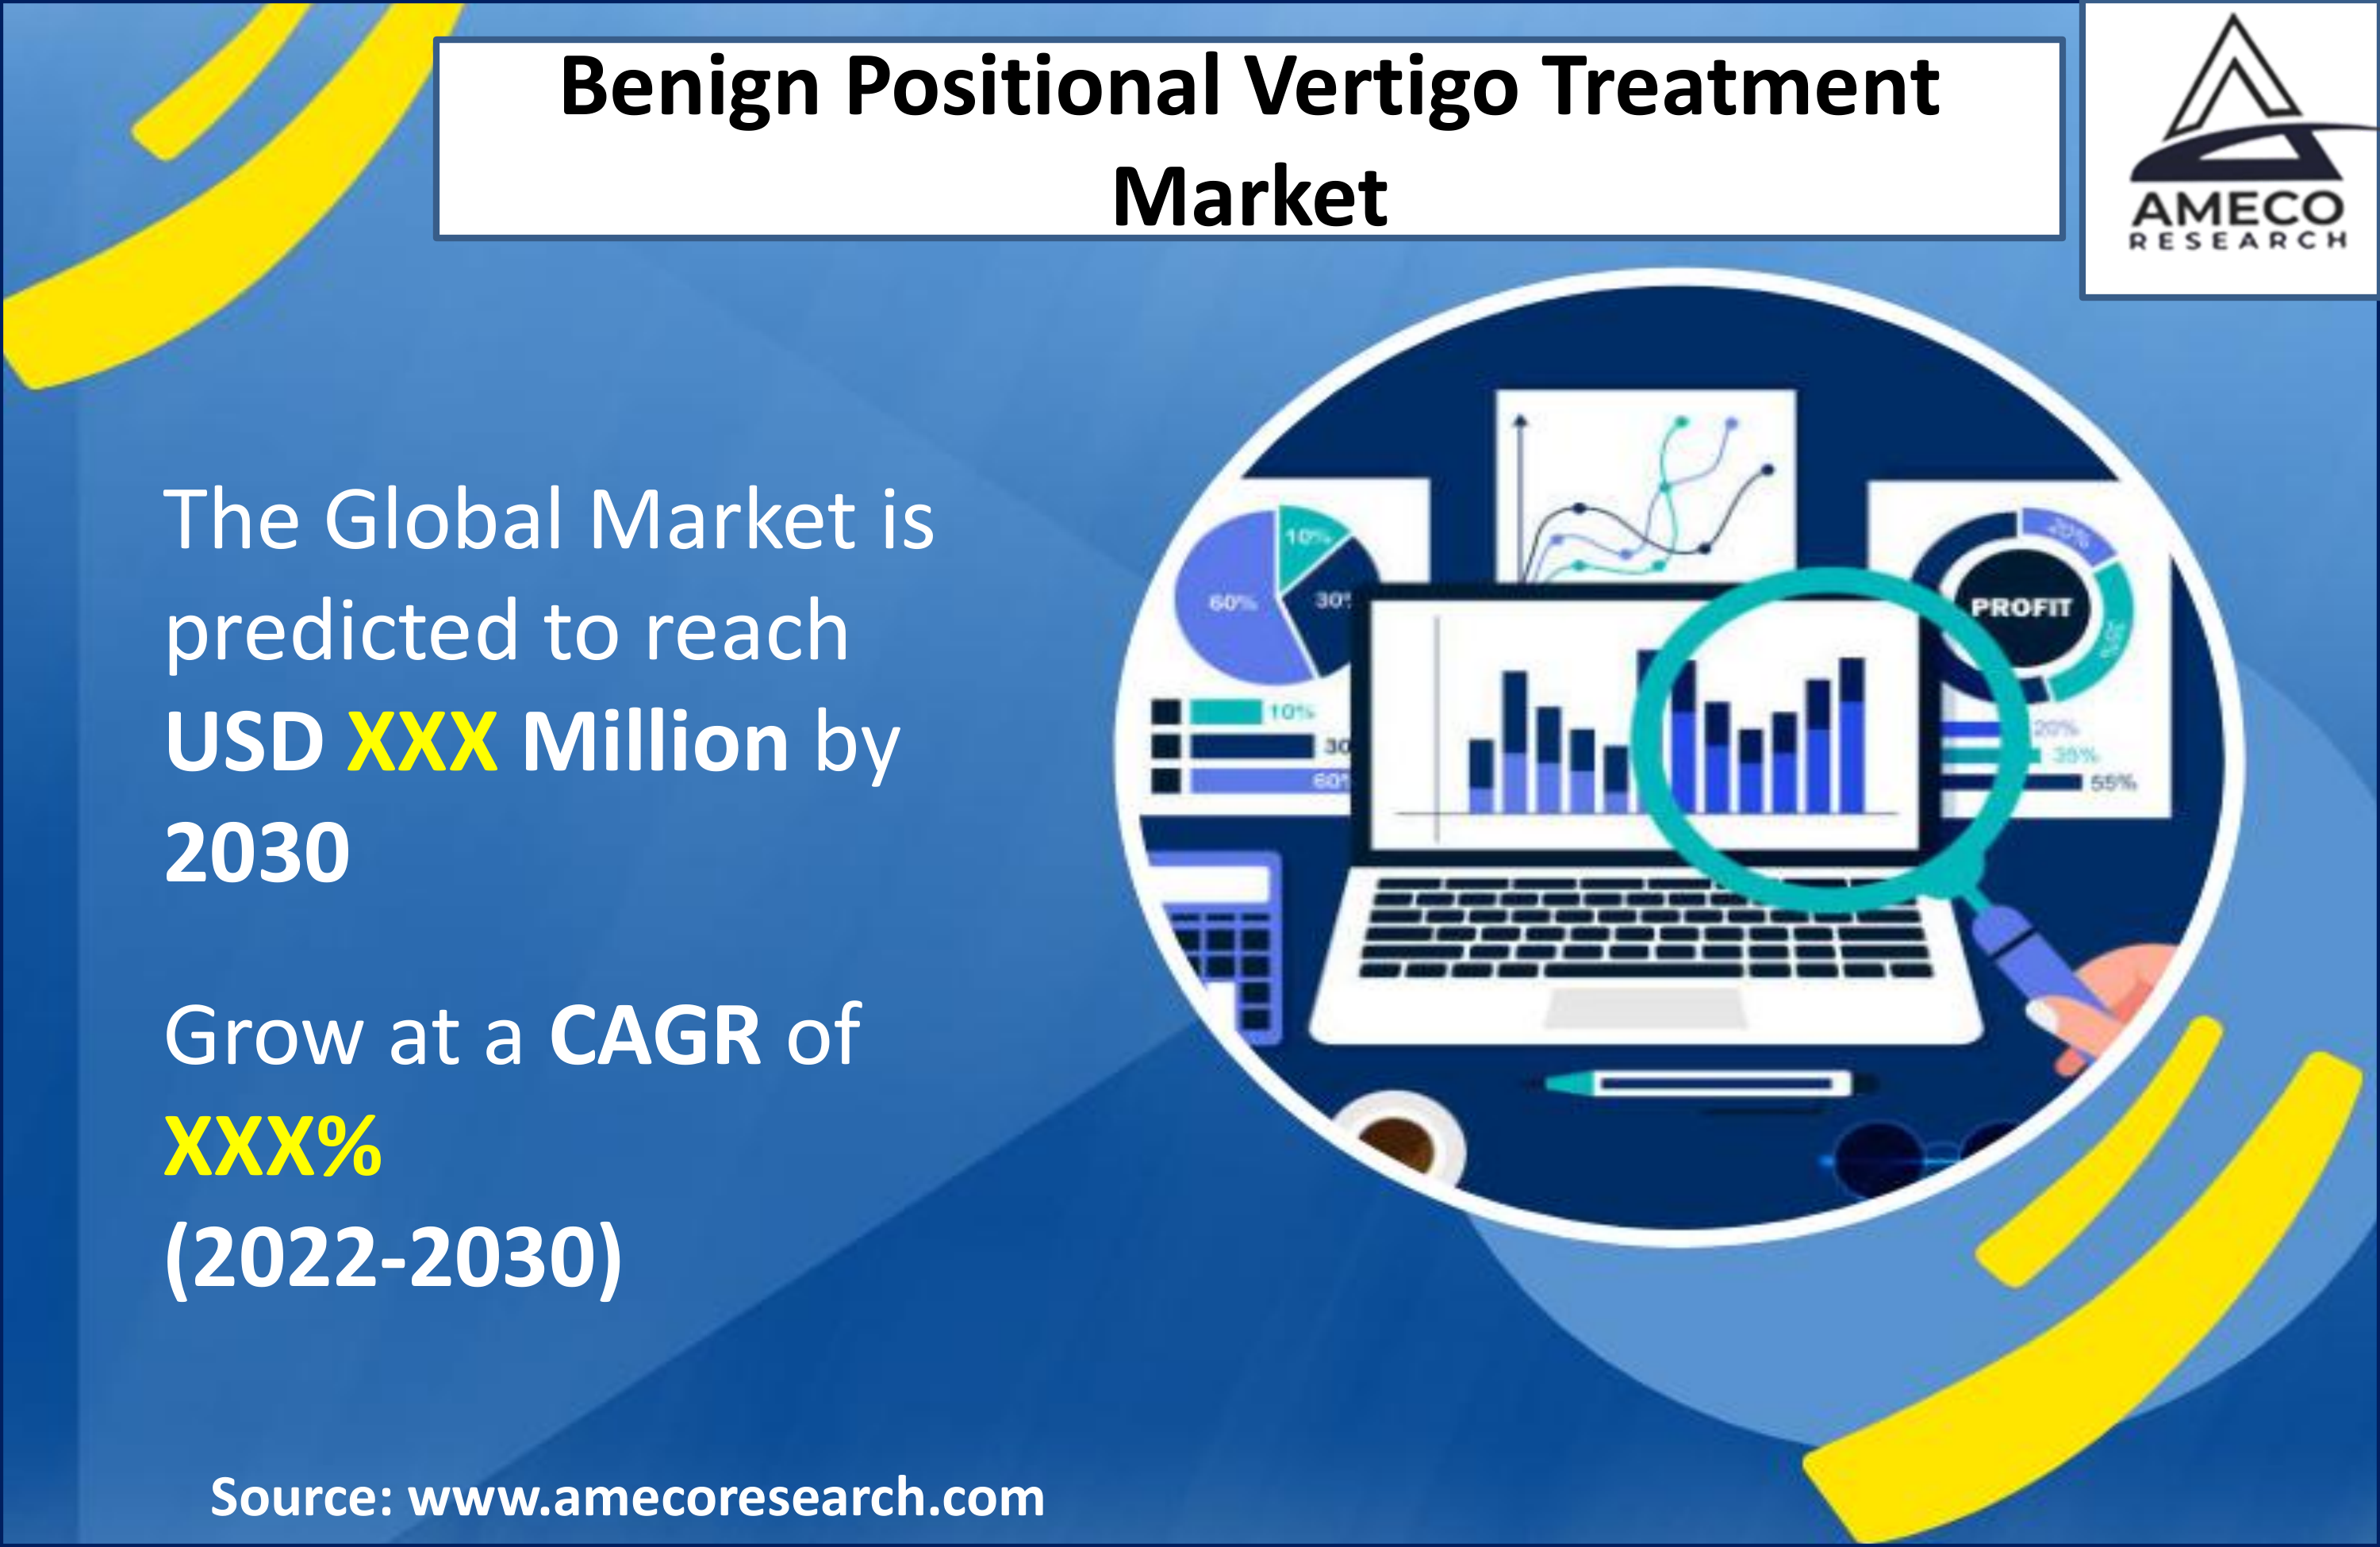 Benign Positional Vertigo Treatment Market